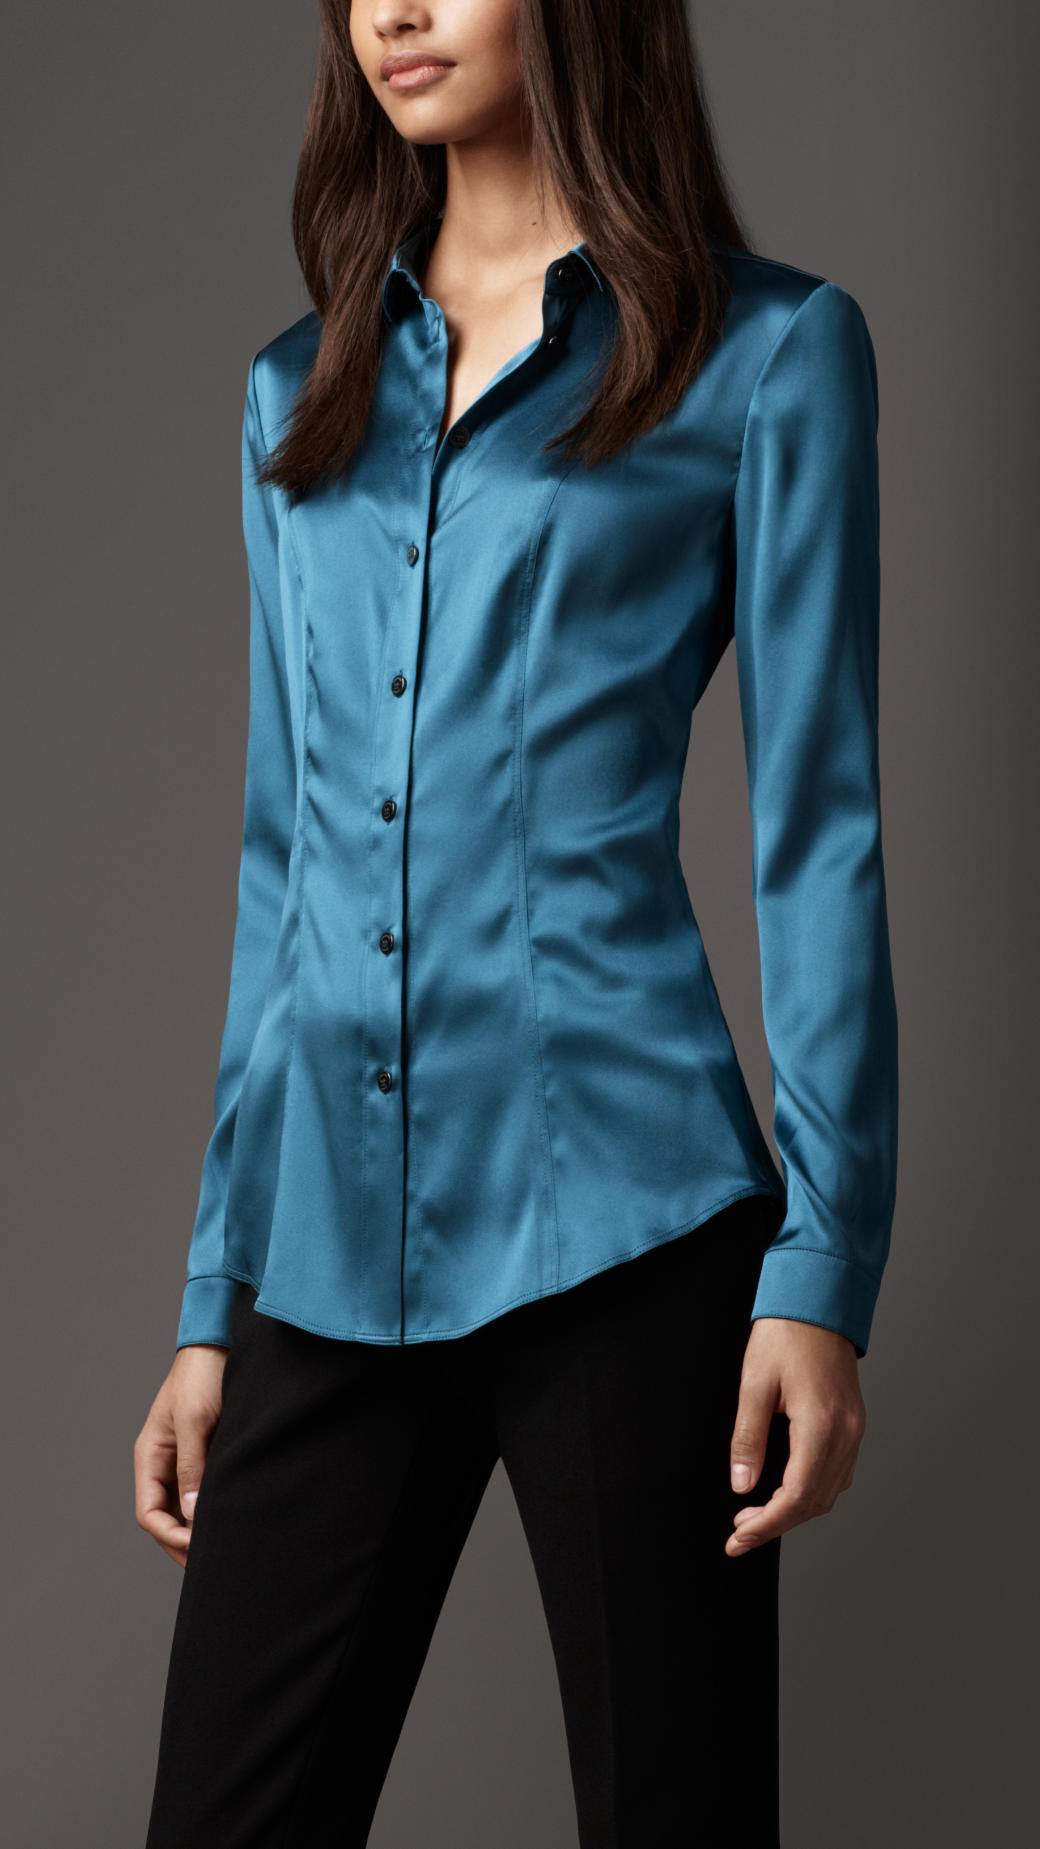 Lyst - Burberry Slim Fit Stretch Silk Shirt in Blue